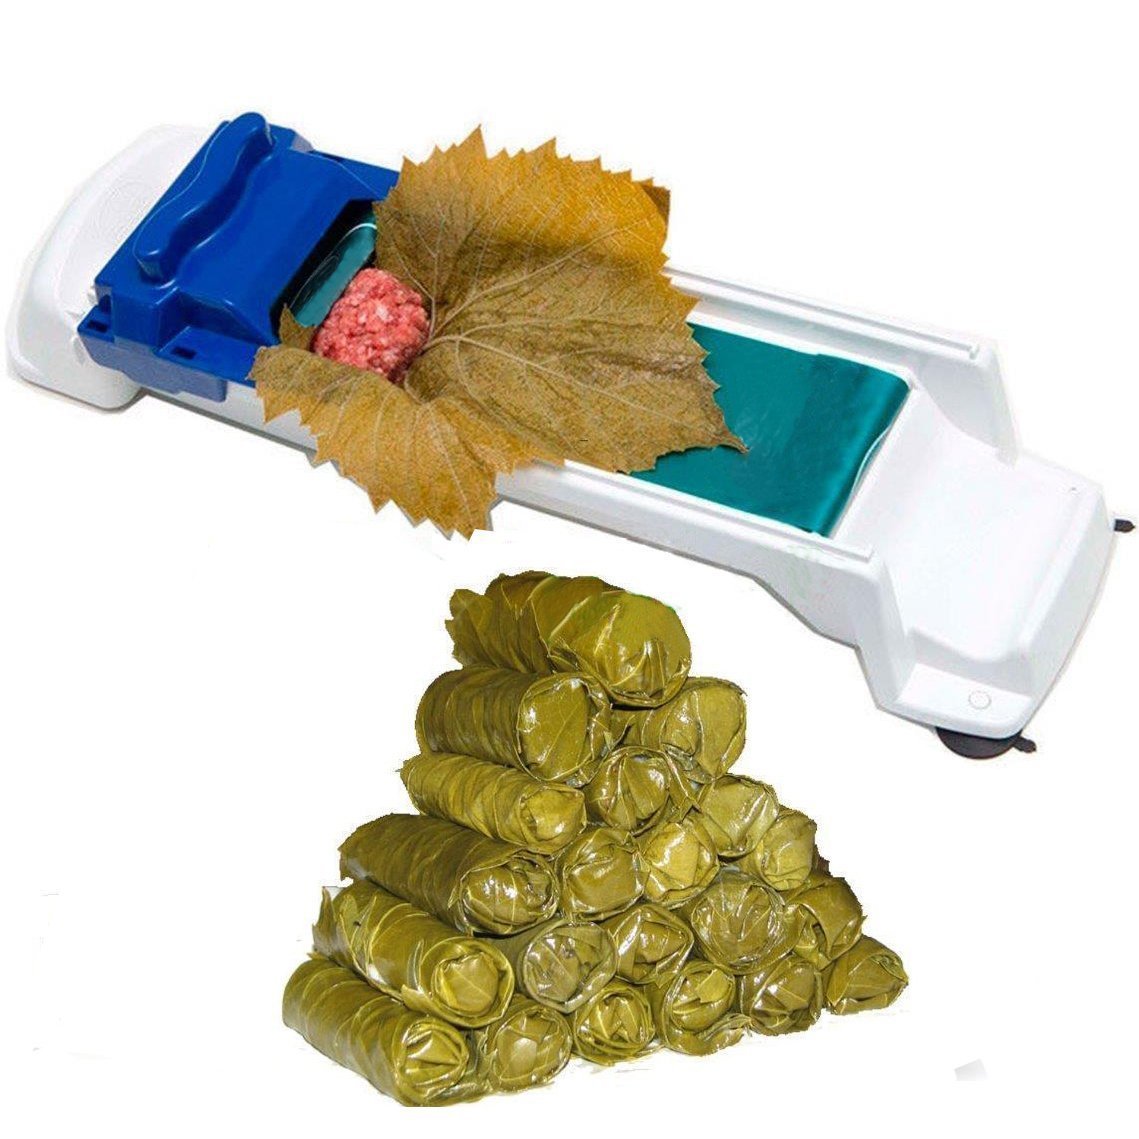 MINBAOYU196810บ้านสะดวกใบองุ่นเครื่องพลาสติก Magic การม้วนเนื้อม้วนเครื่องมือทำซูชิเครื่องตุ๊กตาองุ่นและกระหล่ำปลีผัก Leaf Rolling Tool